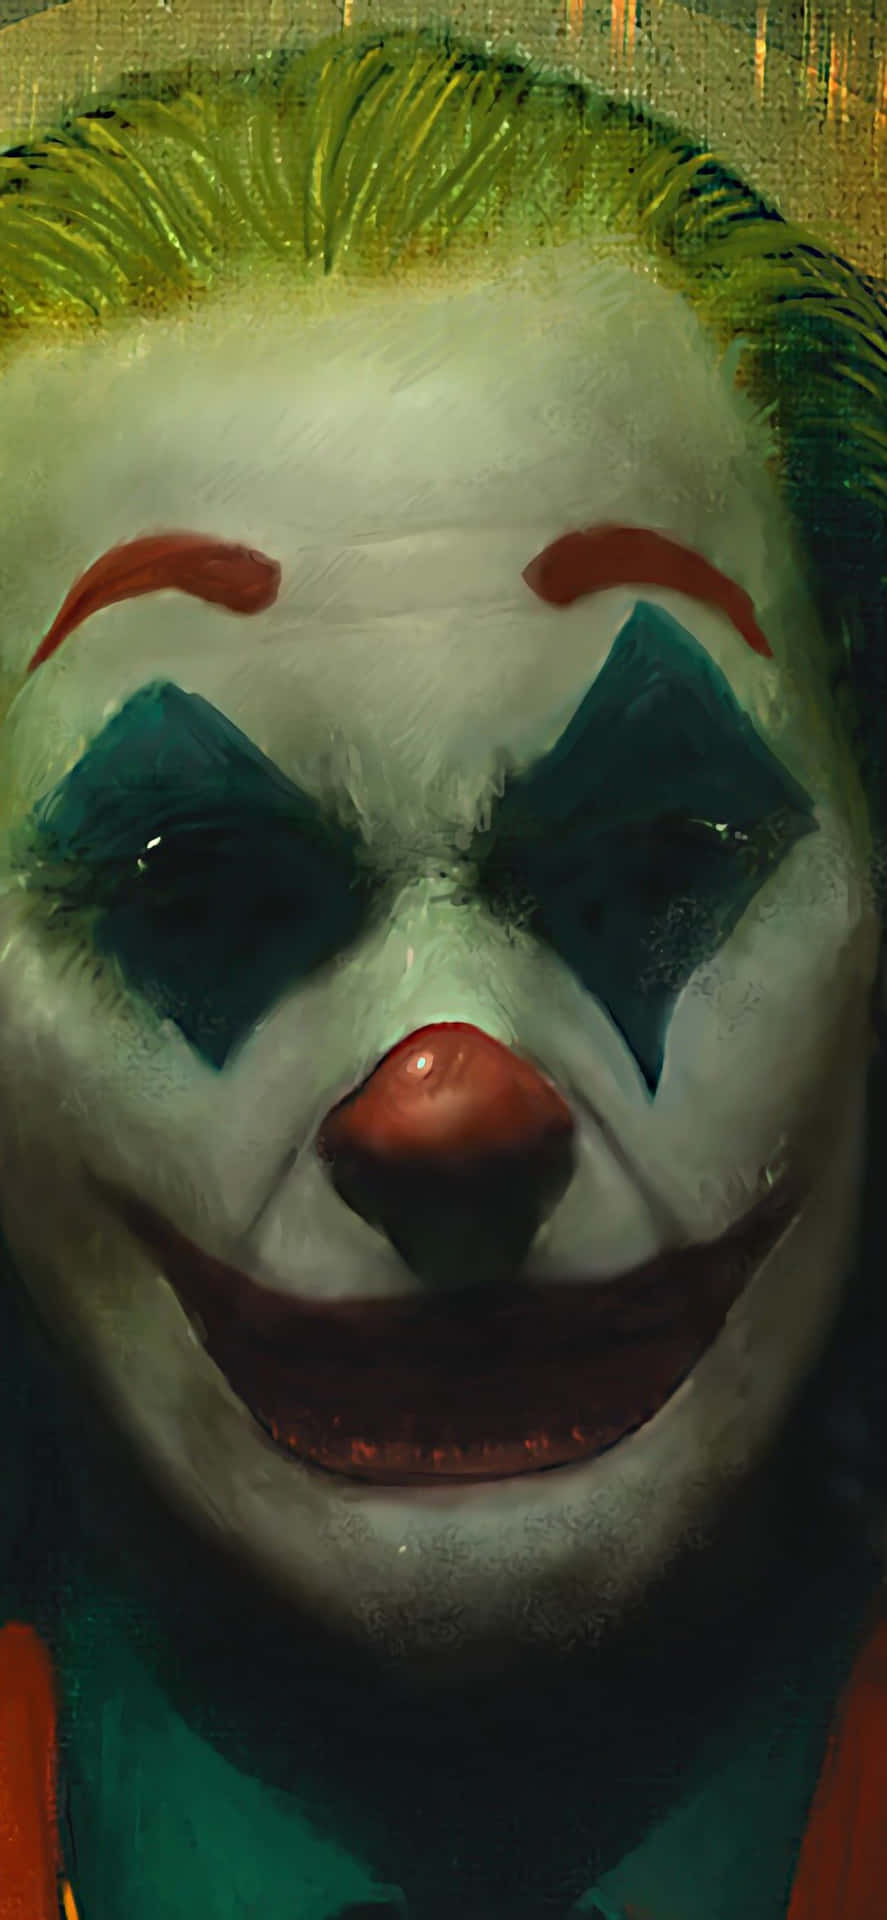 Vibrant artwork of the iconic Joker character on canvas Wallpaper